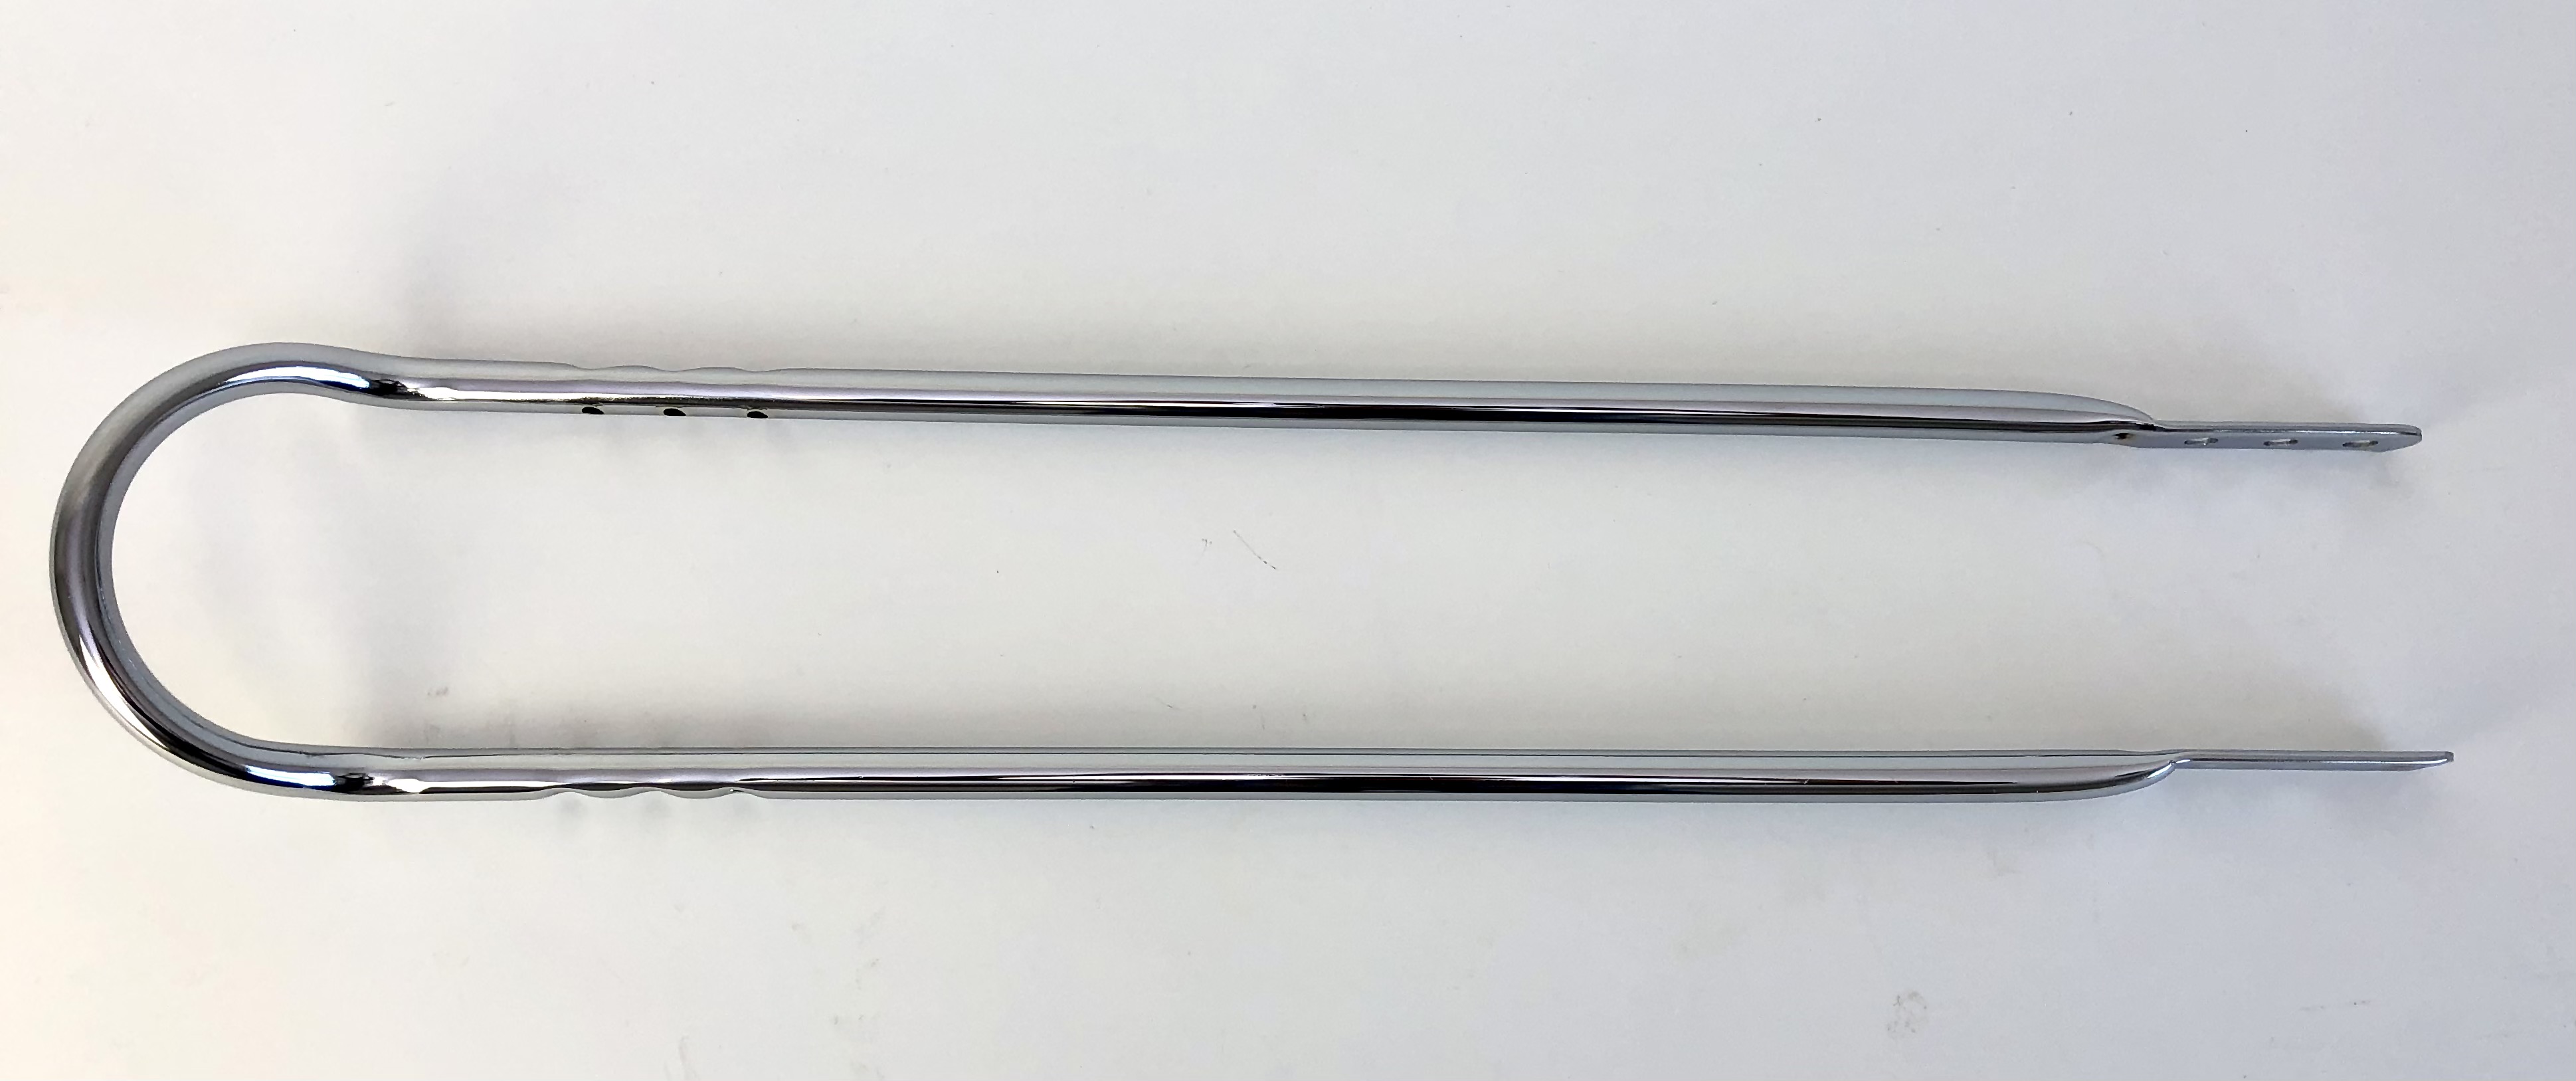 Sissybar 70 cm  chrome plated